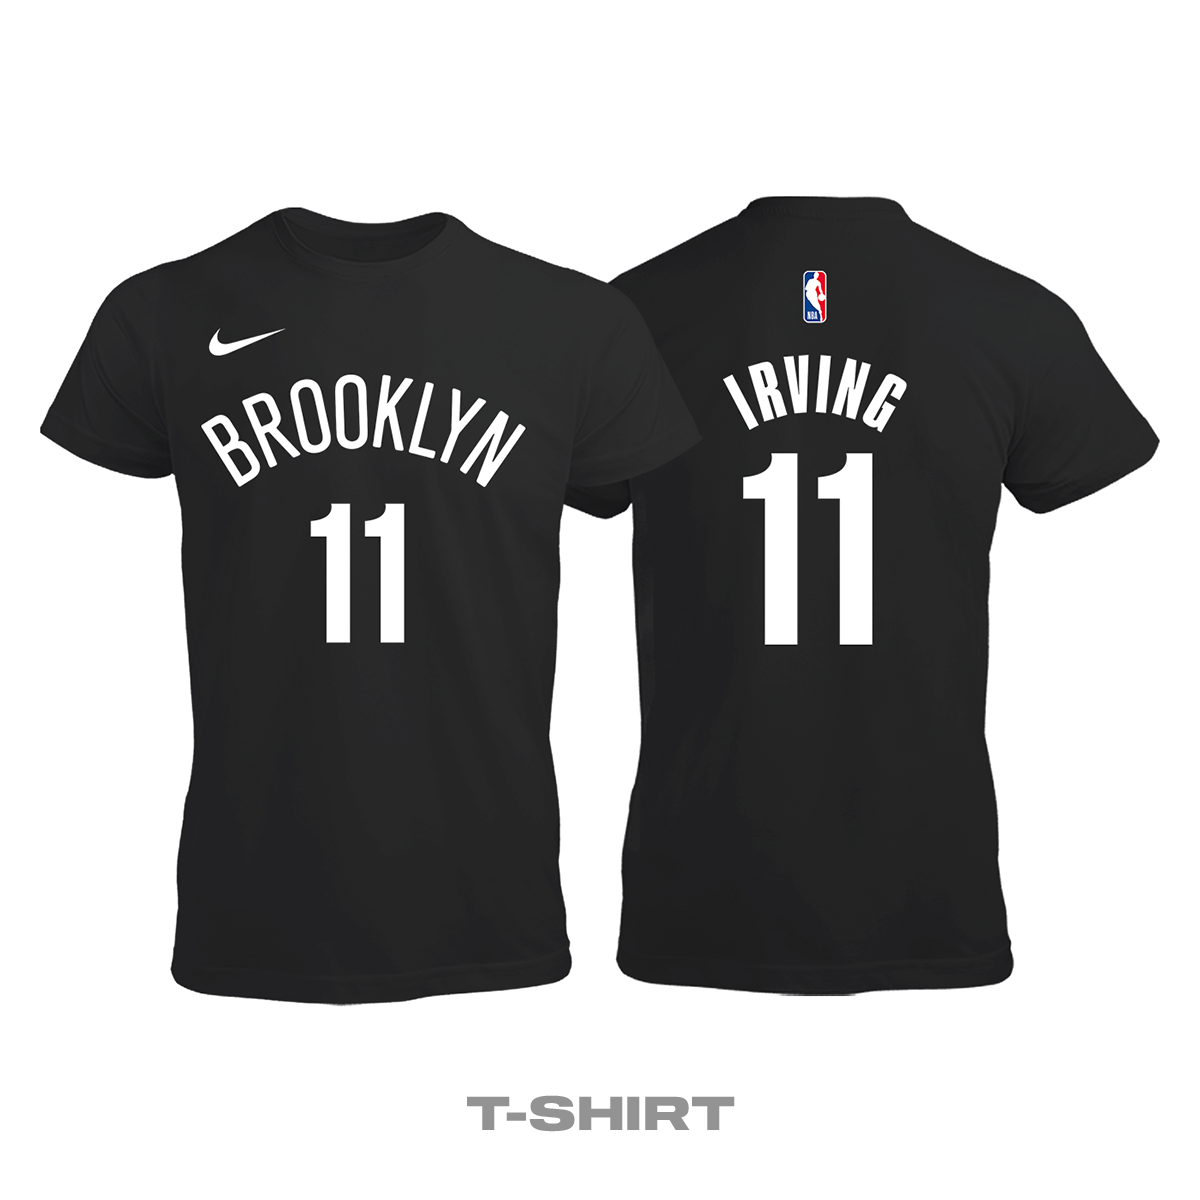 Brooklyn Nets: City Edition 2018/2019 Tişört